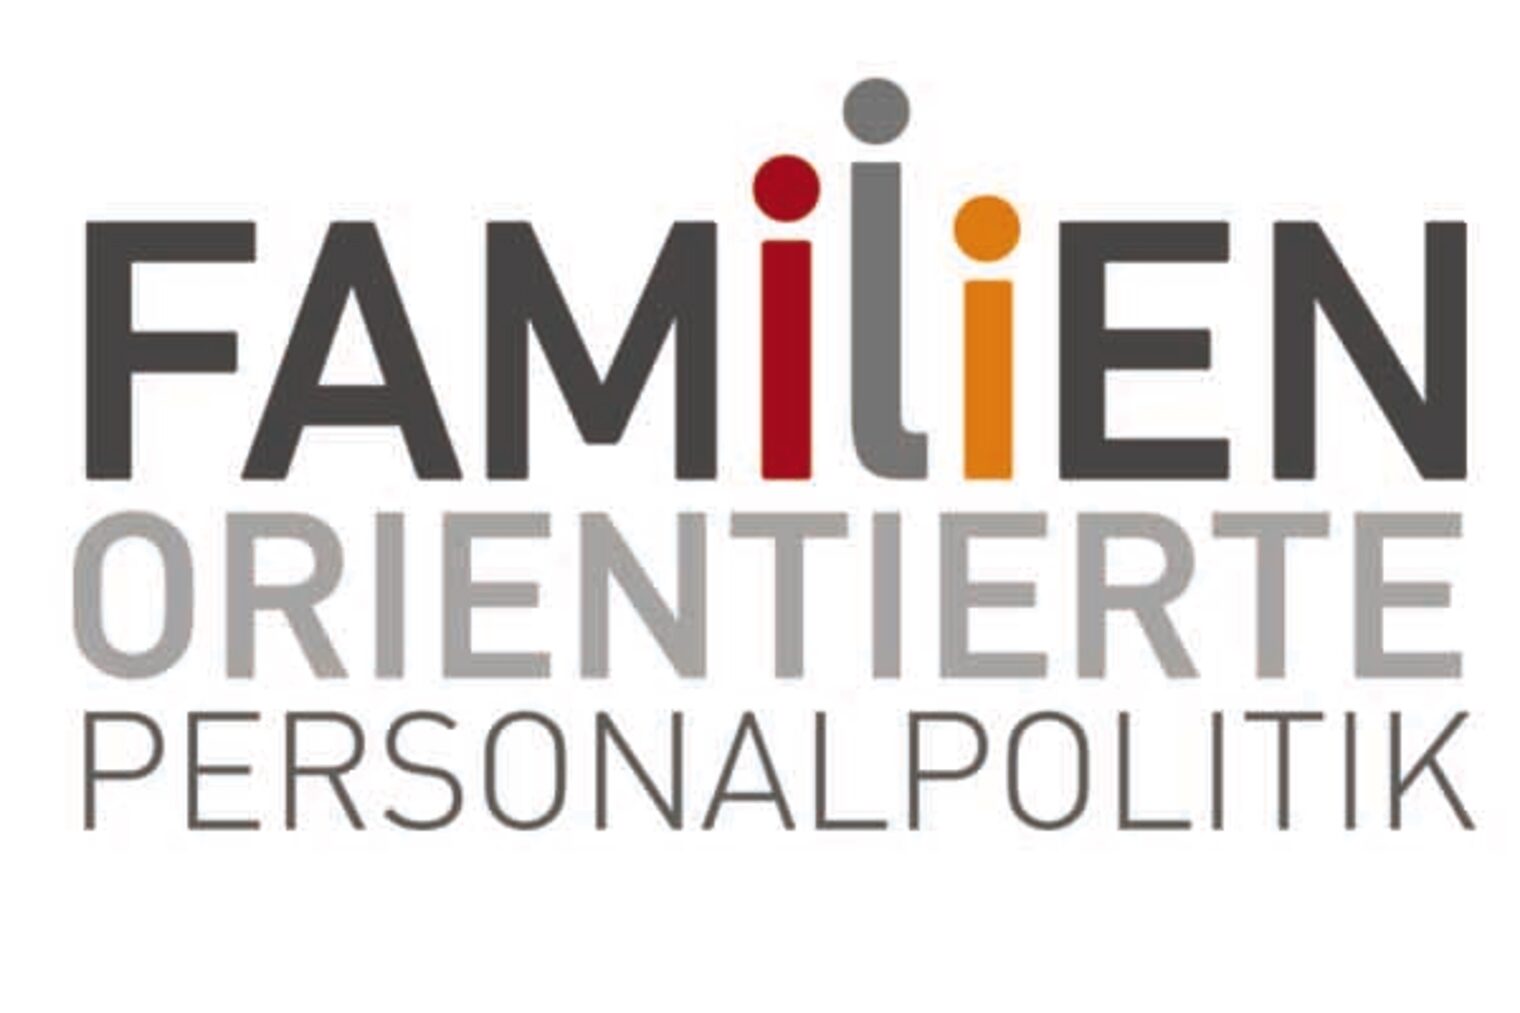 Logo_Familienorientierte_Personalpolitik_1140x400